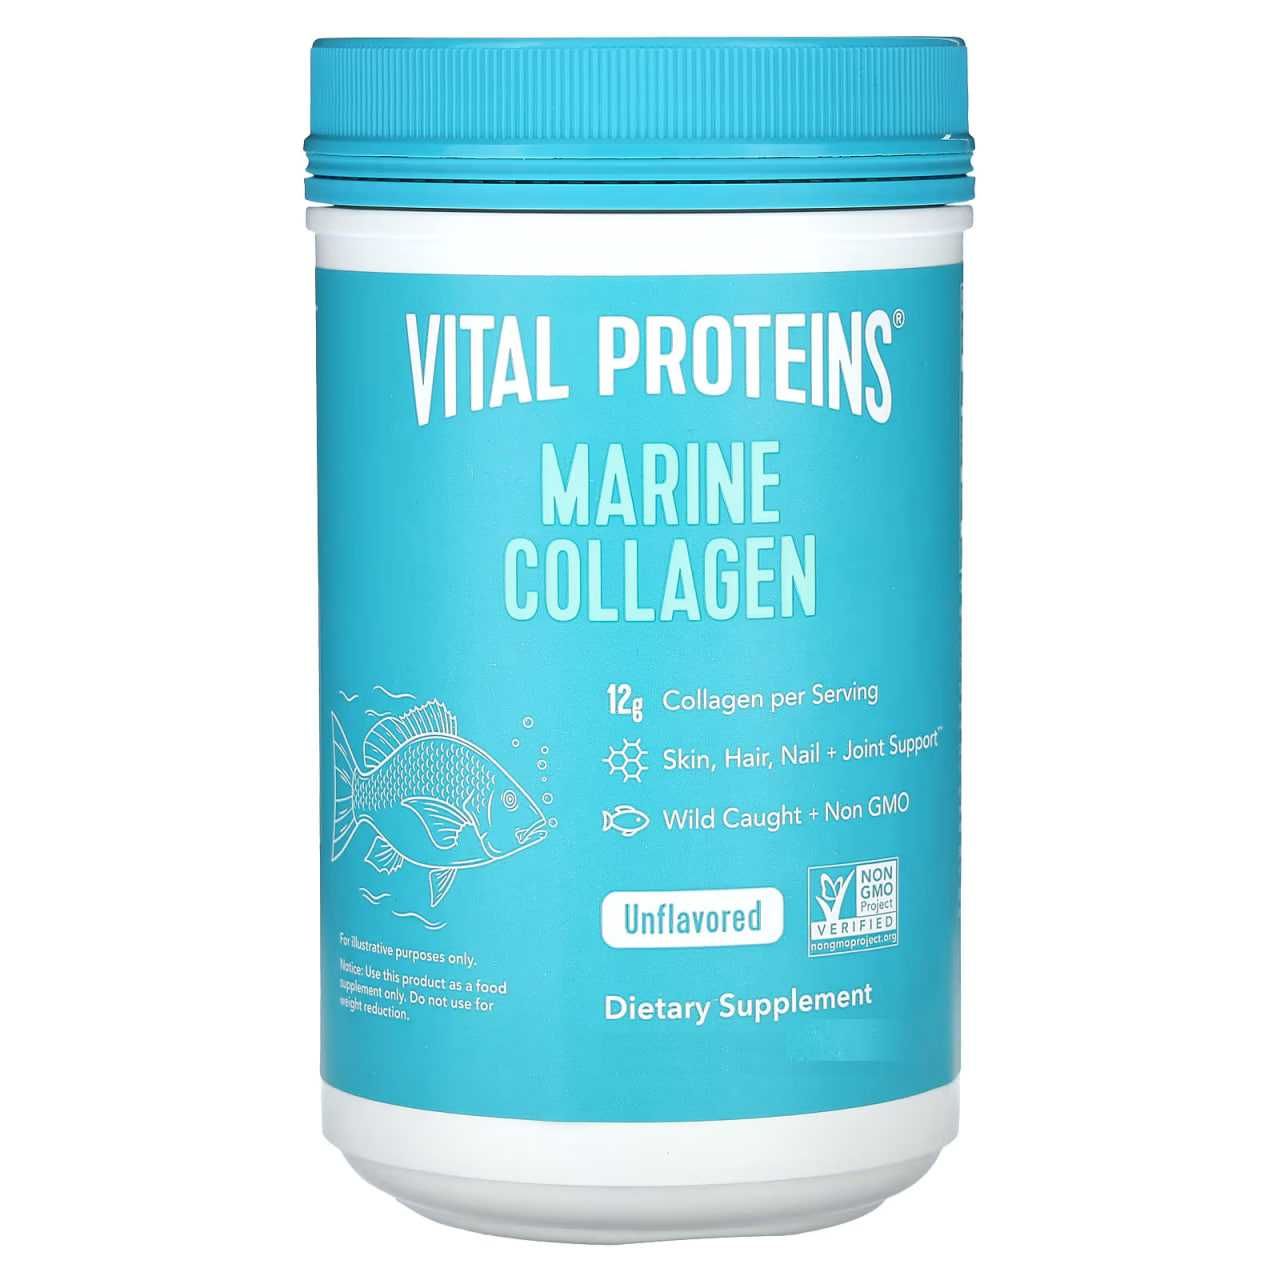 Витал протеин морской коллаген, 413 гр. Vital Proteins marine collagen